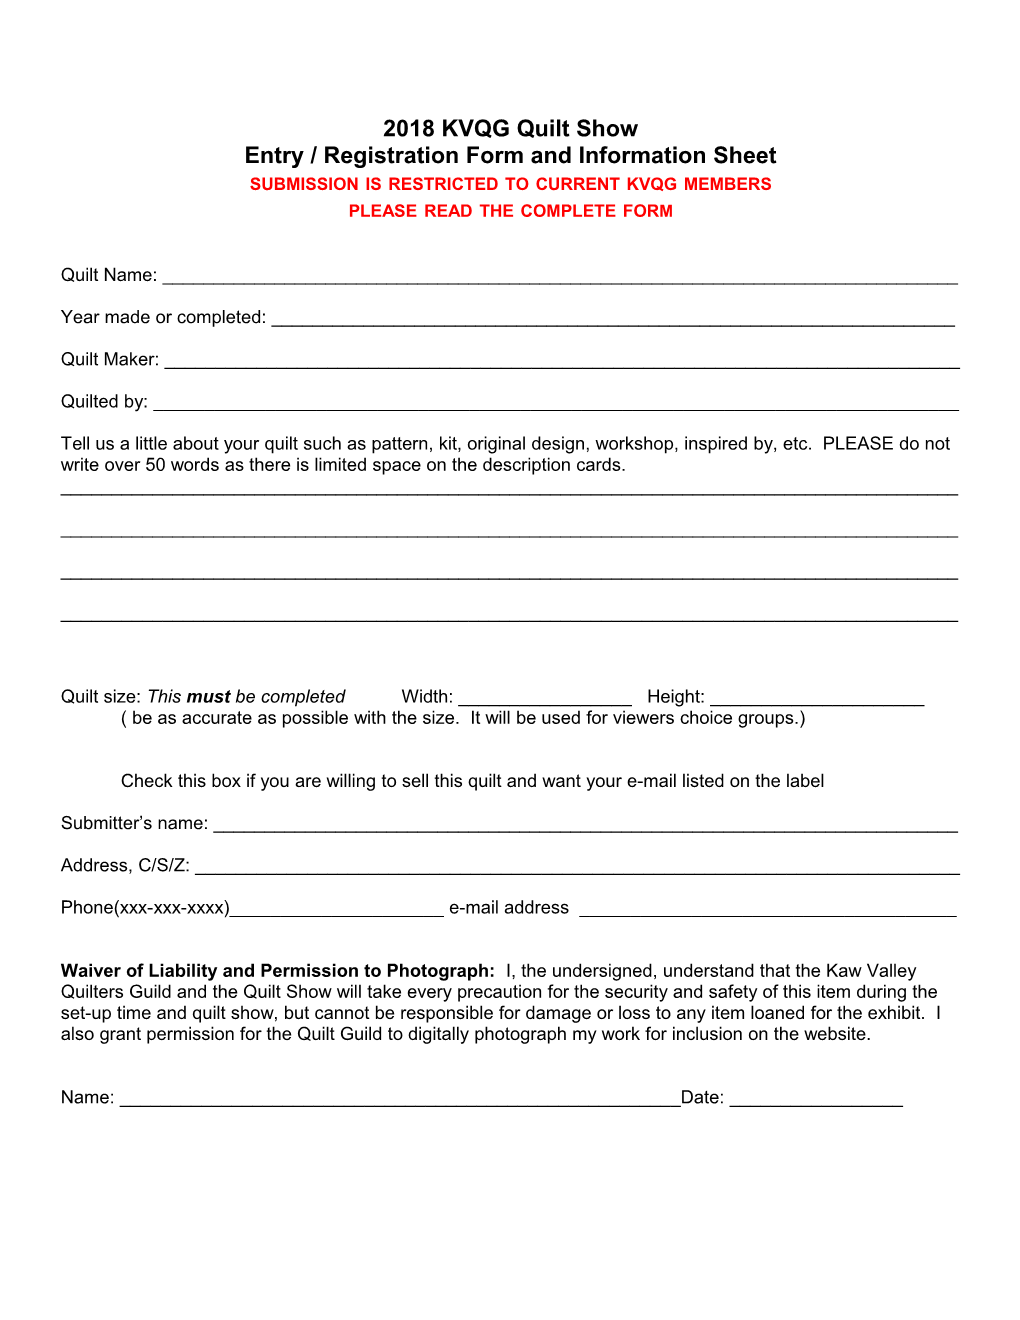 Entry / Registration Form Andinformation Sheet